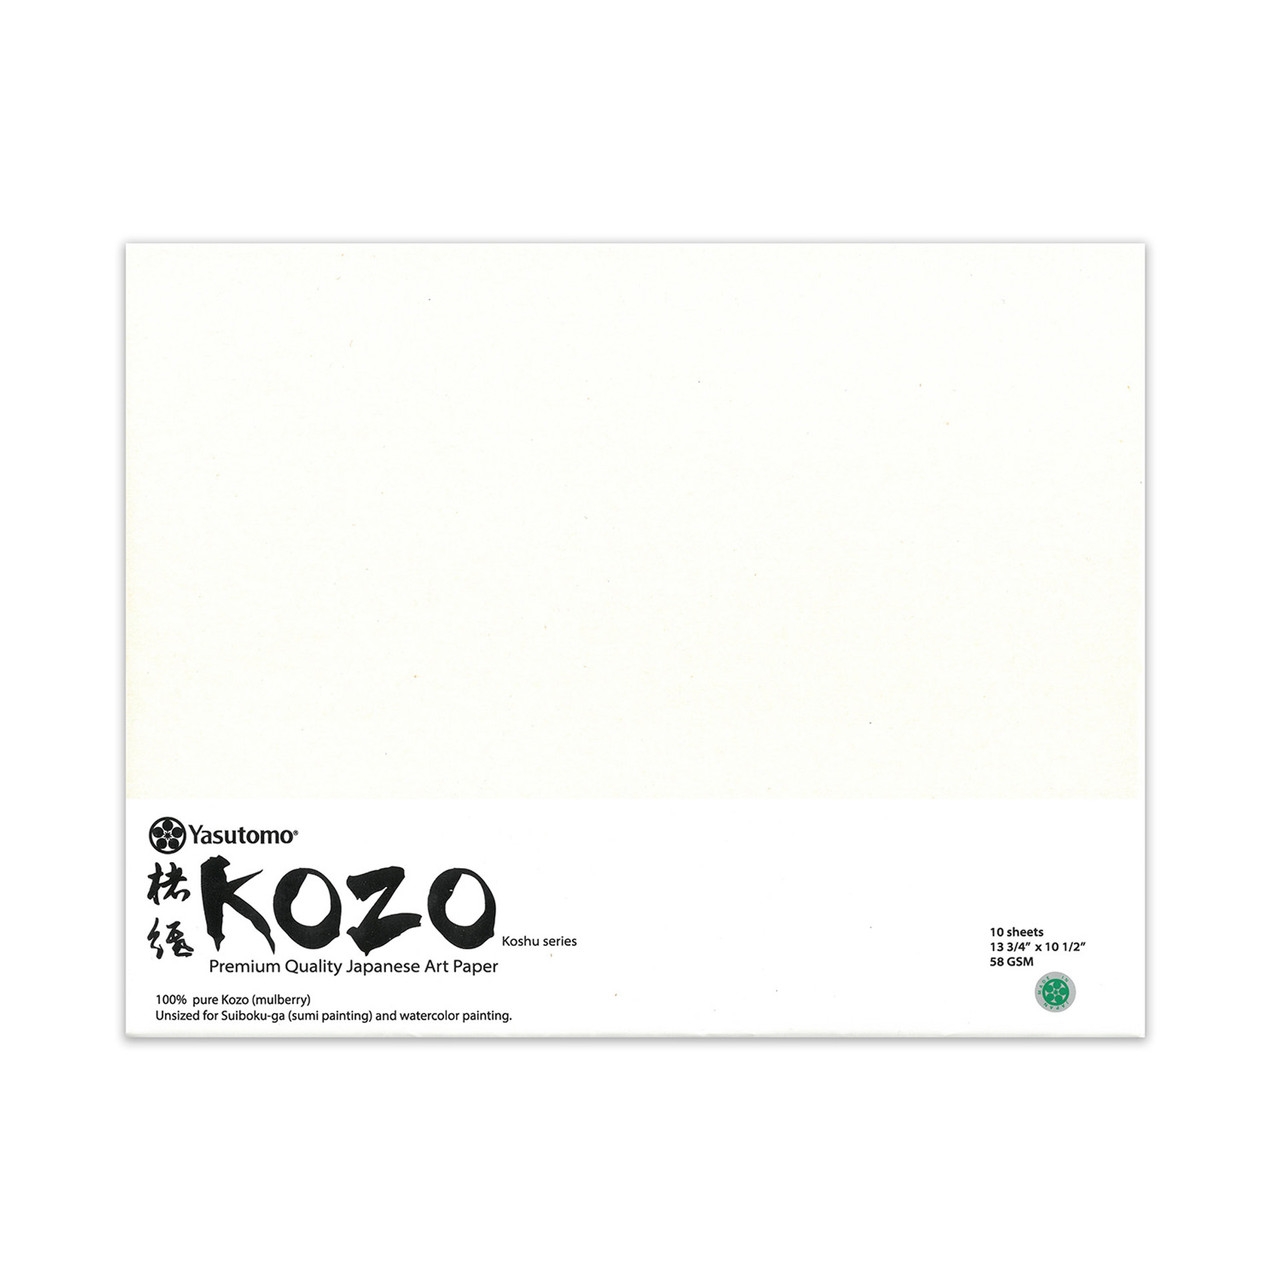 Yasutomo Rice Paper Roll, 11in x 60 ft., Kozo